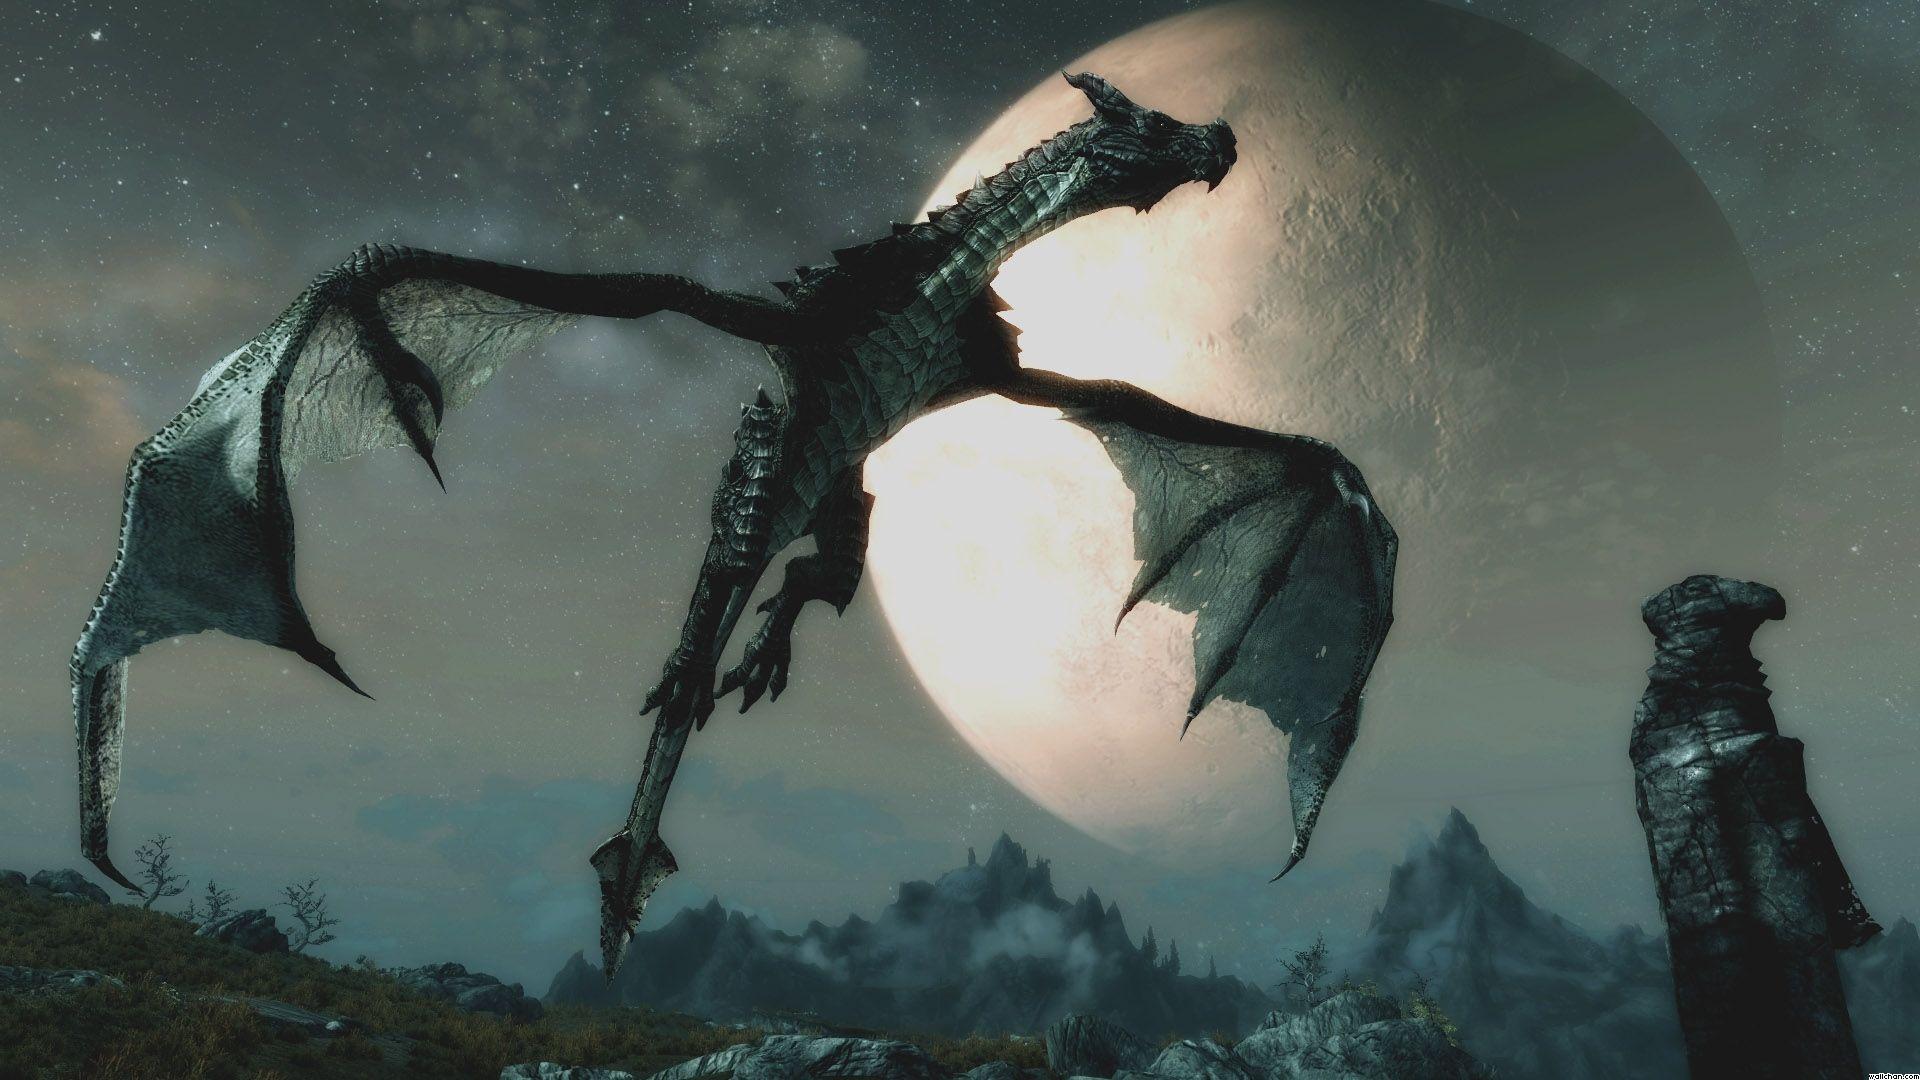 Game News: Report: The Elder Scrolls V: Skyrim's 'Dragonborn' DLC